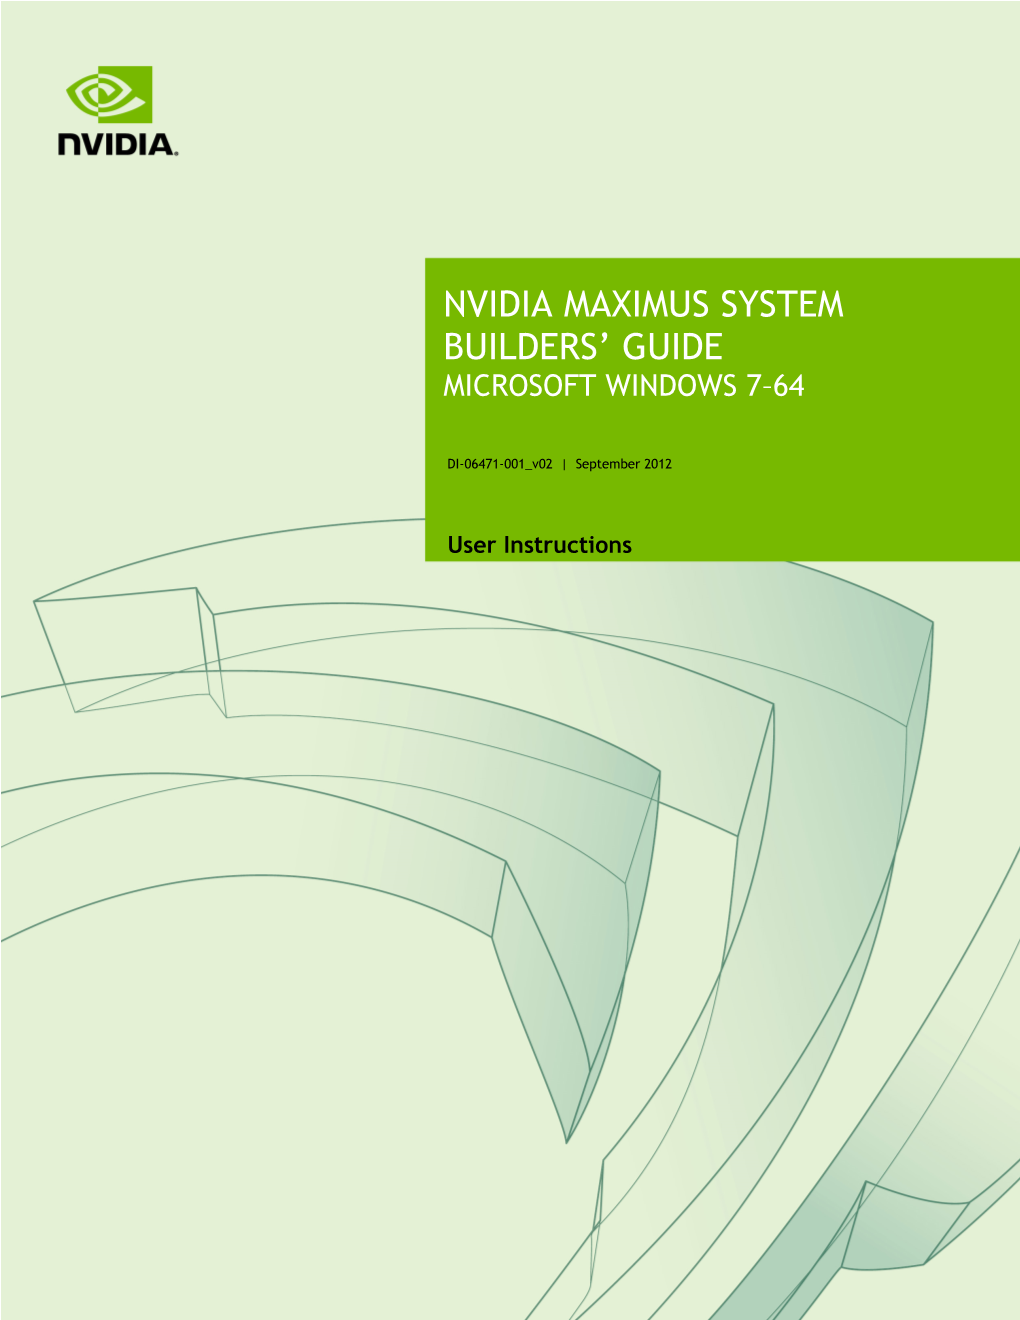 Nvidia Maximus System Builders' Guide